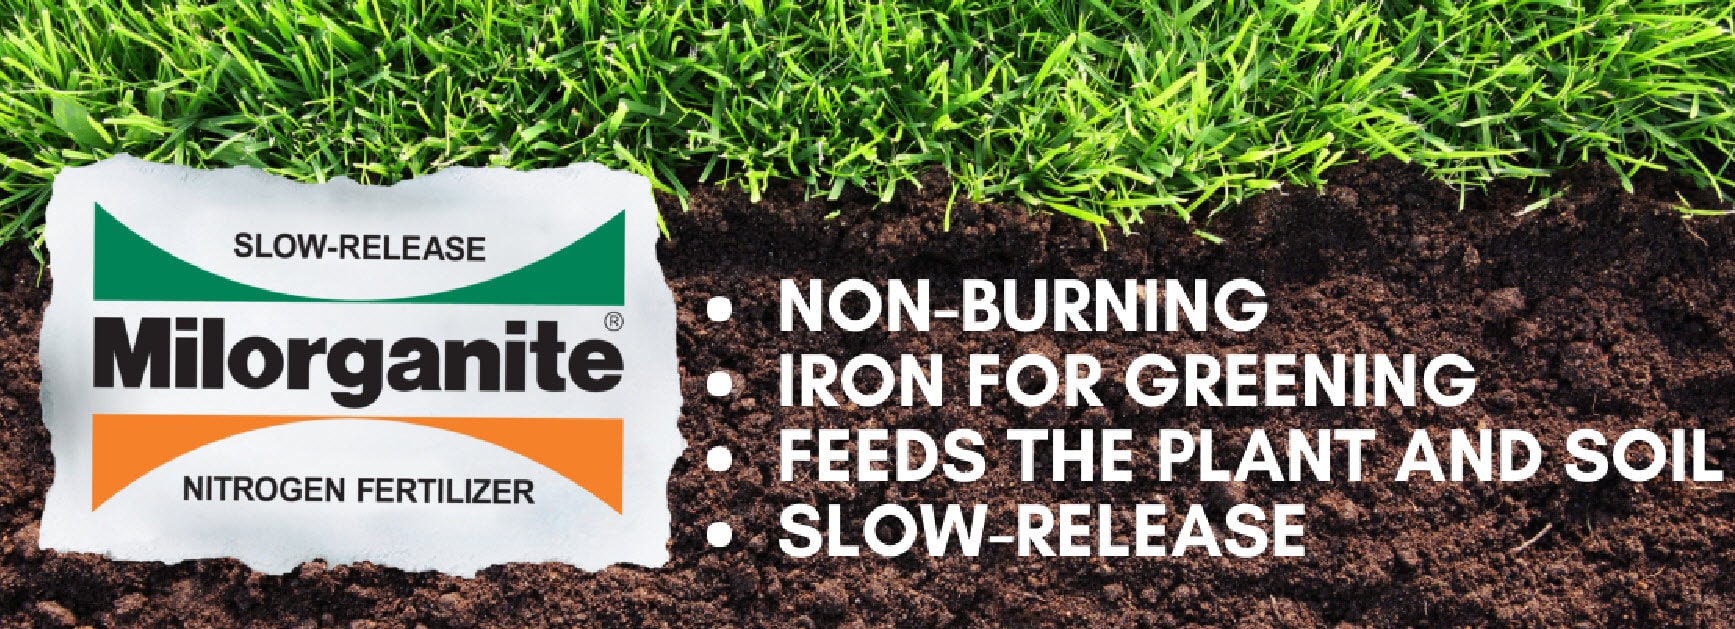 milorganite fertilizer slow release nitrogen lawn garden why grass herbeins burn soil